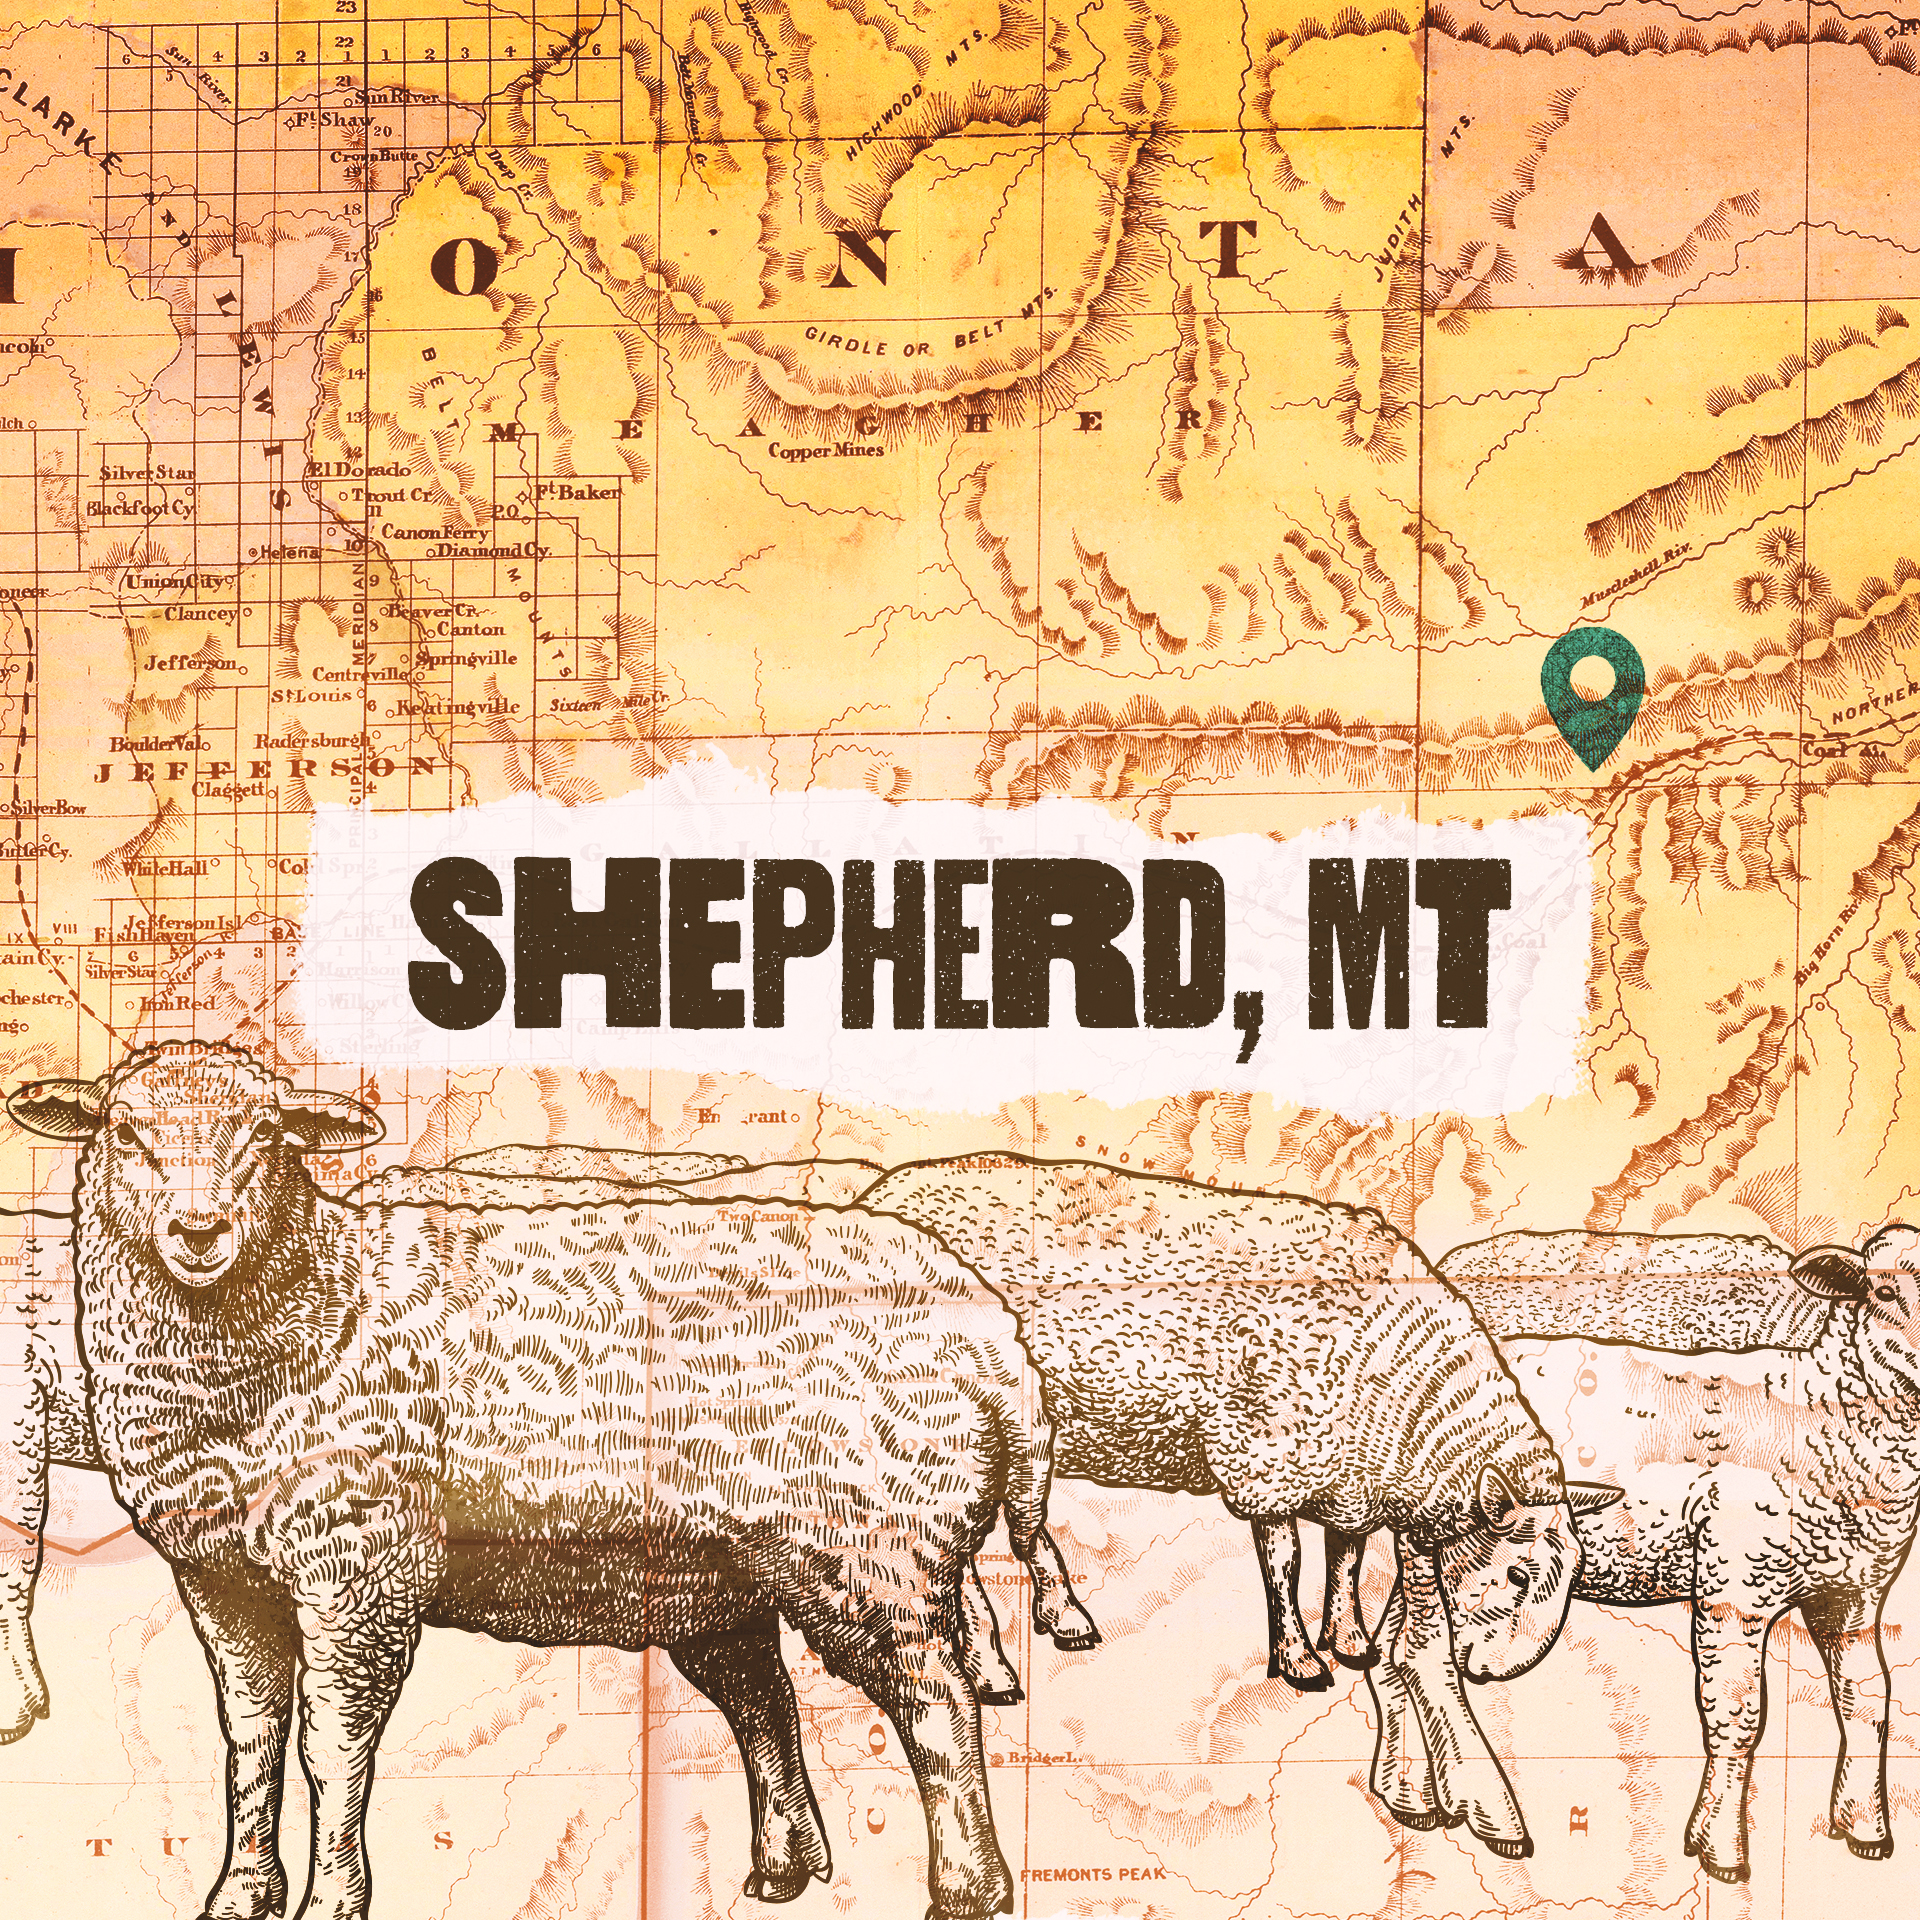 Shepherd, MT #2: John 10: My Sheep Know My Voice